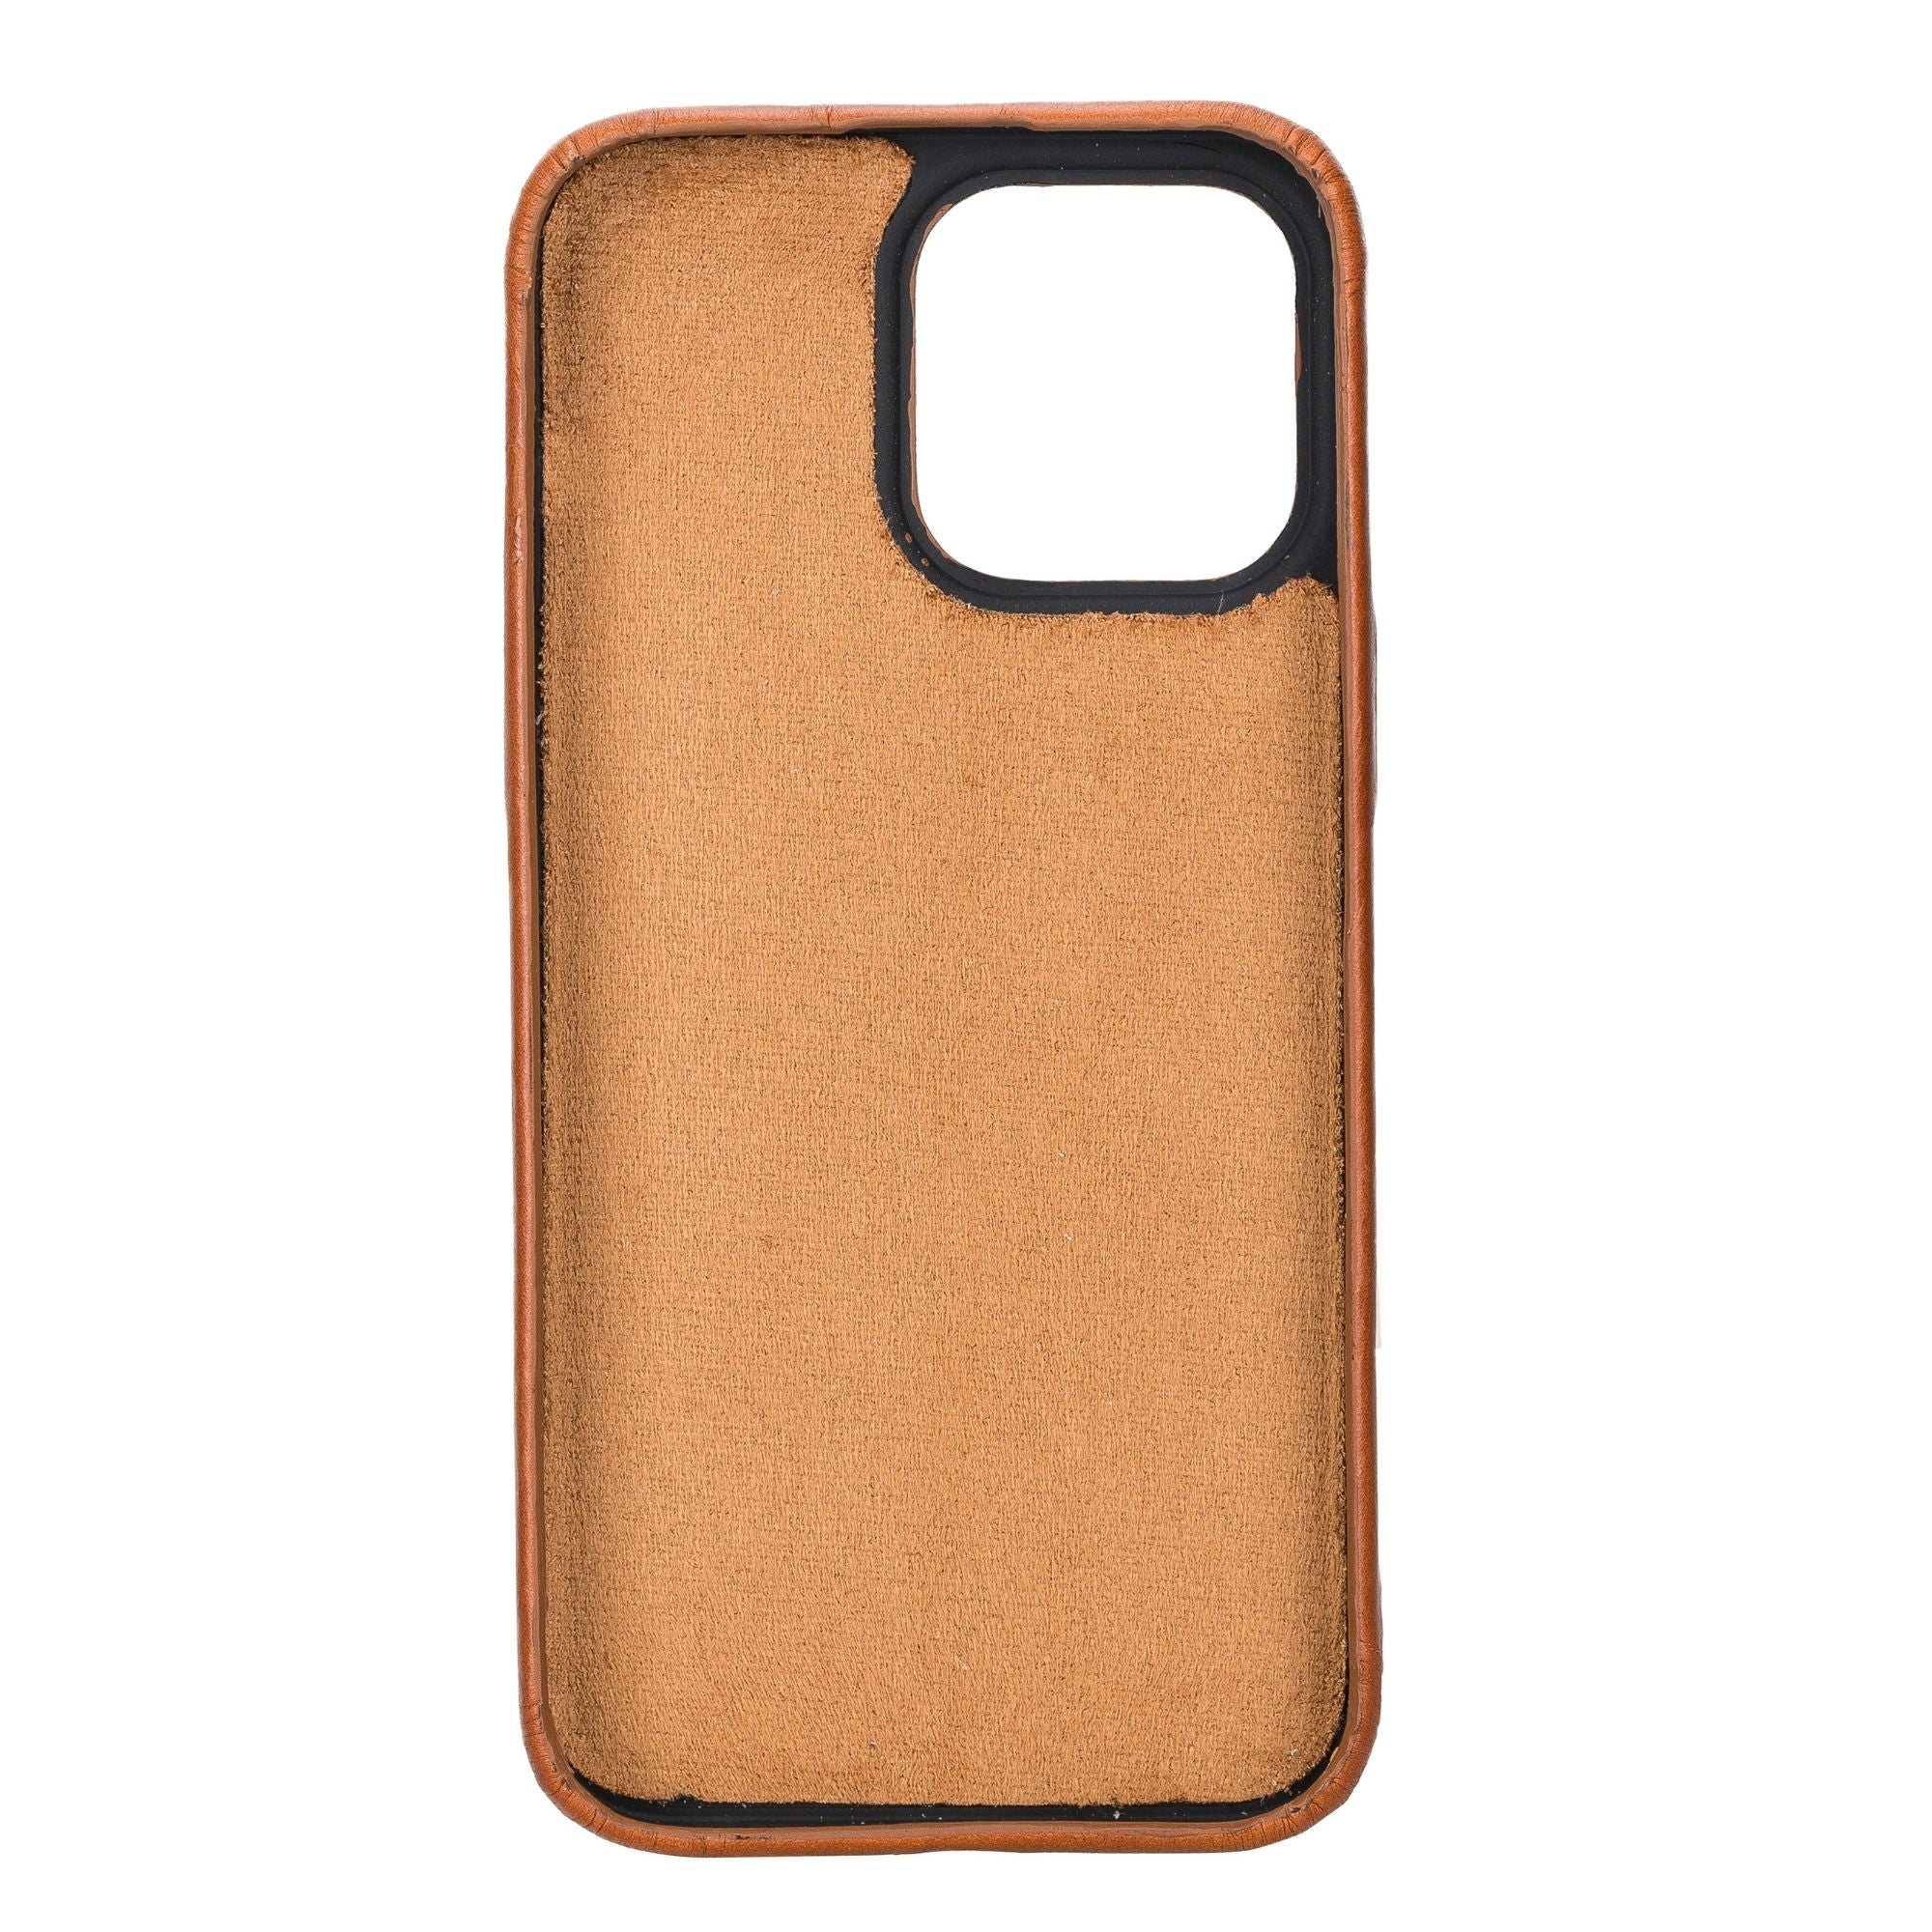 iPhone 12 mini leather cases